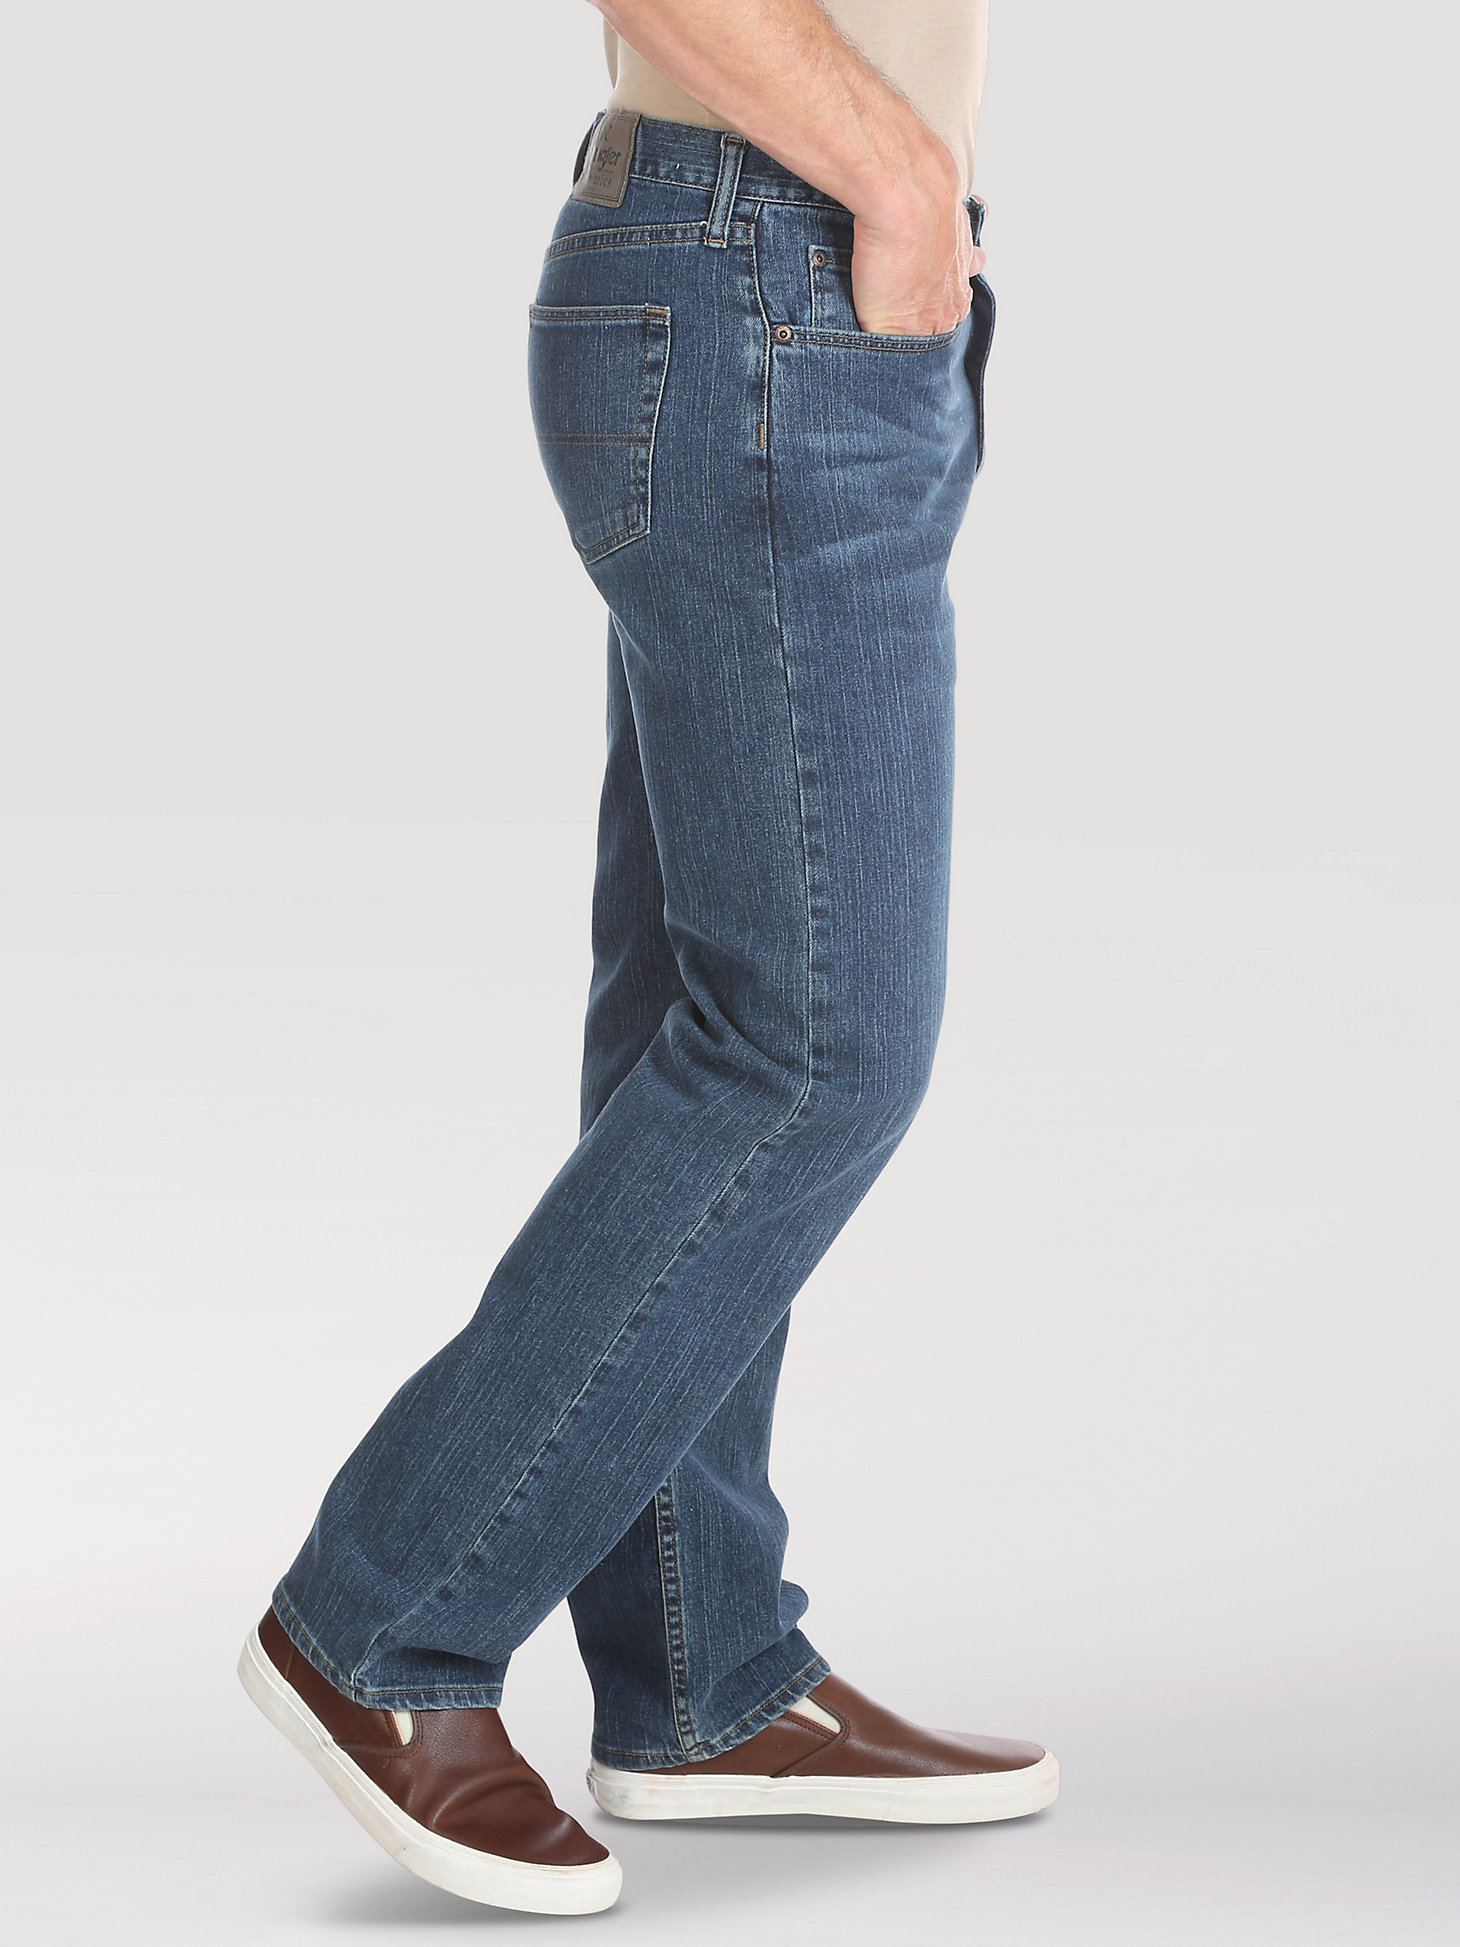 Men's Wrangler Authentics® Regular Fit Flex Jean in Blue Ocean alternative view 1